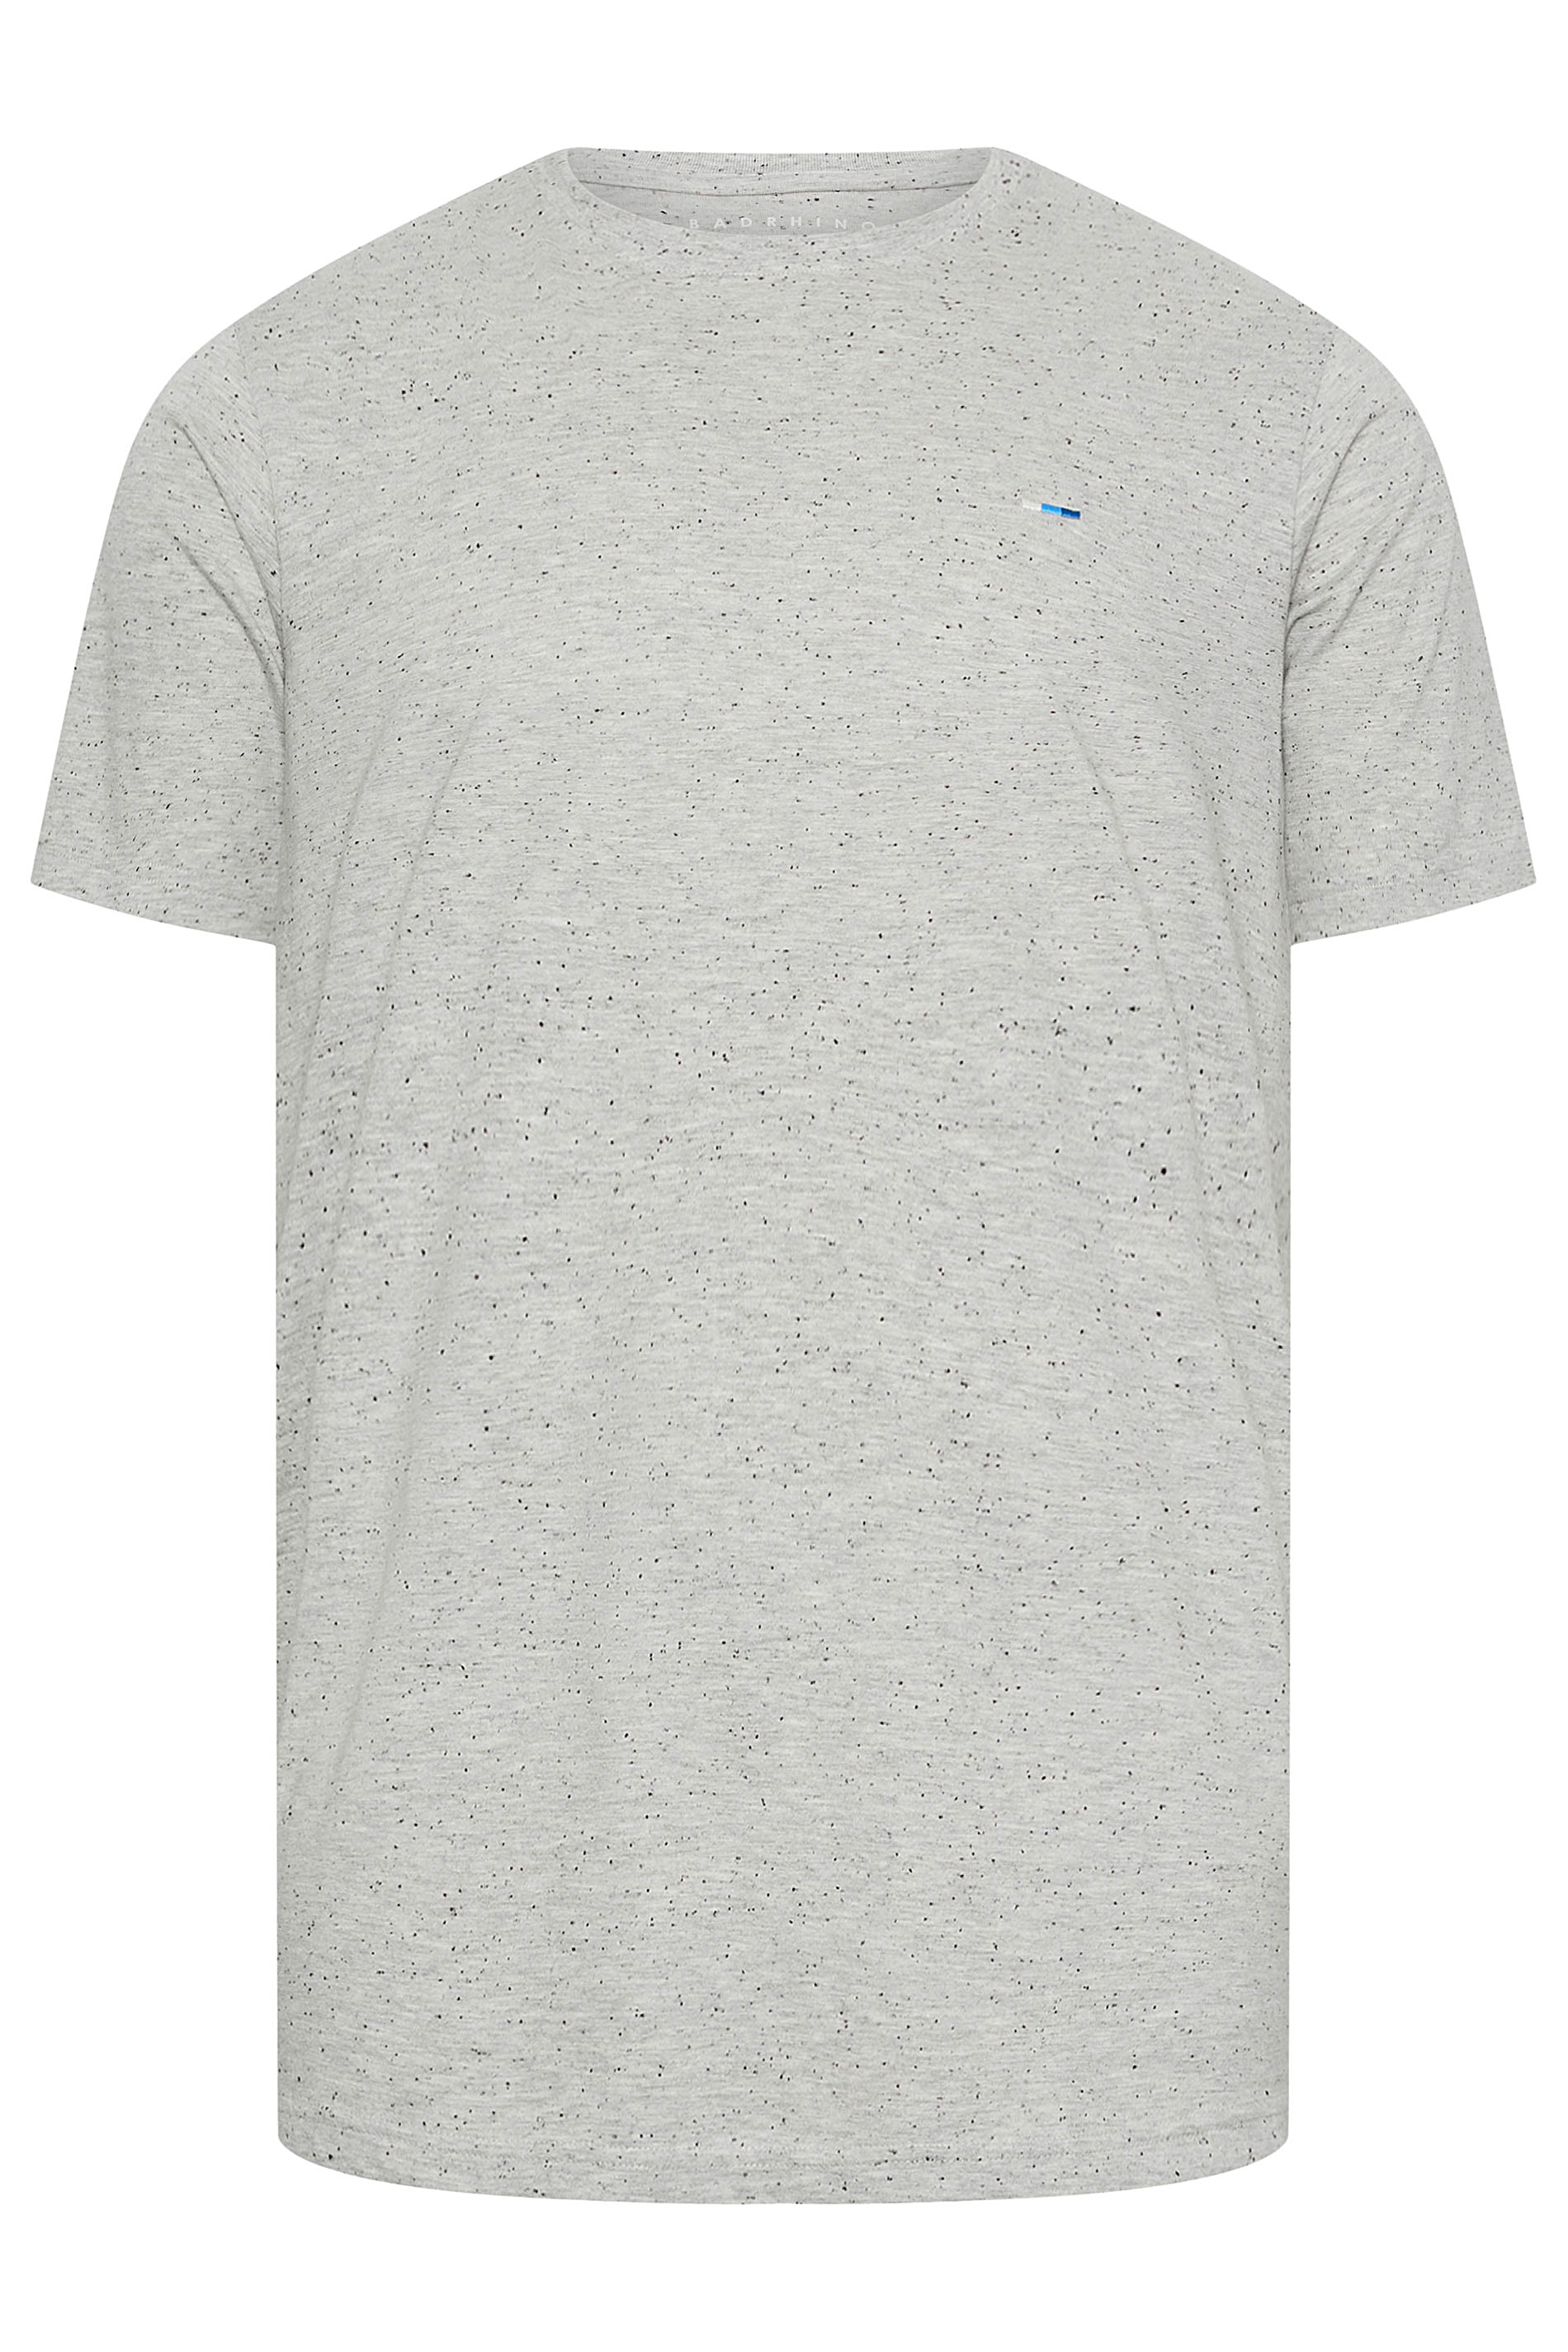 BadRhino Big & Tall Grey Neppy Marl T-Shirt| BadRhino 2